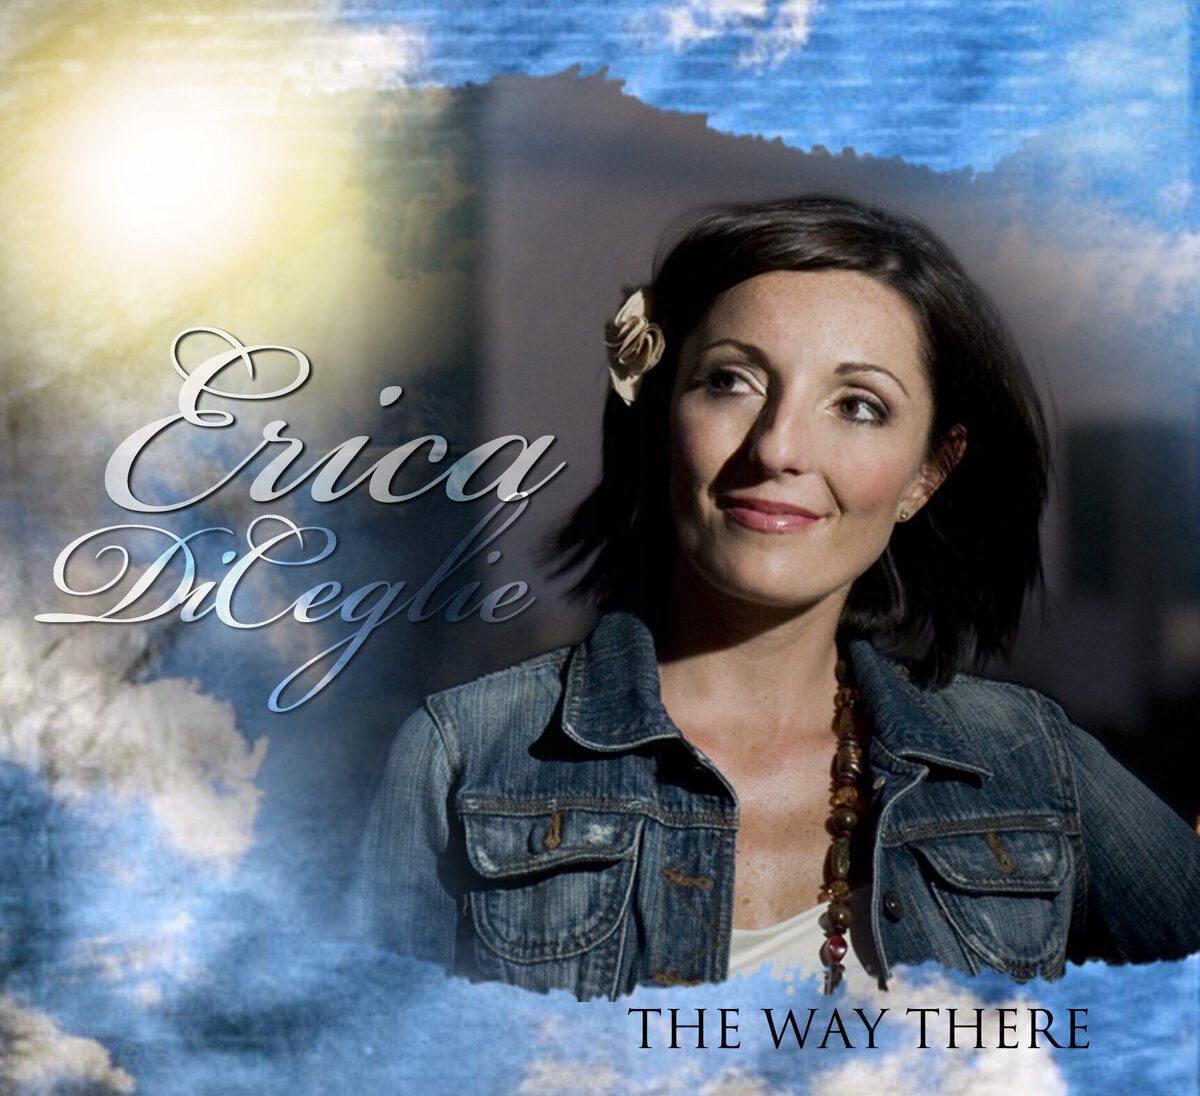 Erica CD Cover4